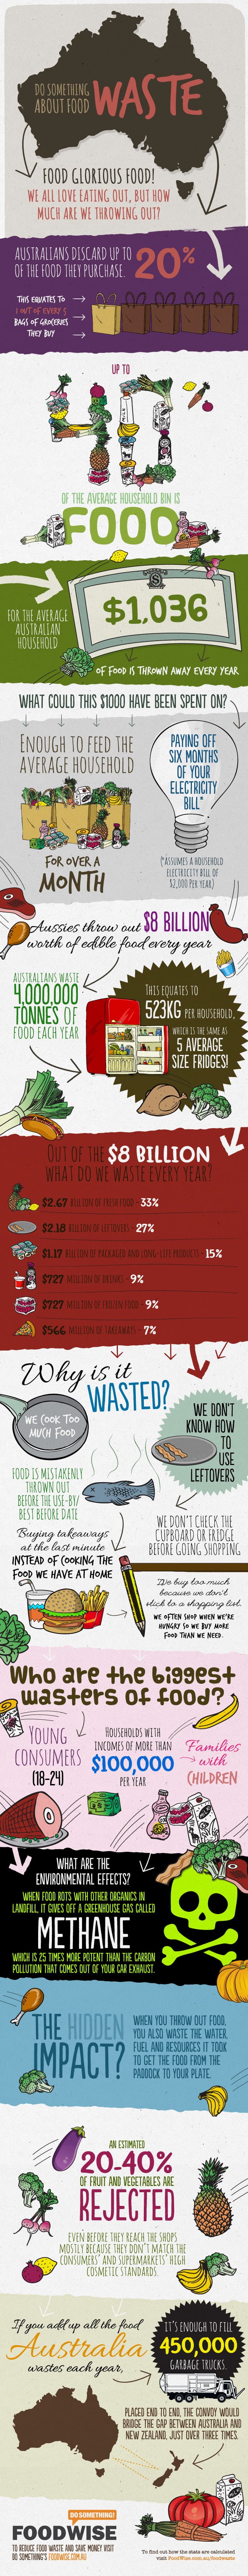 Australian Food Waste